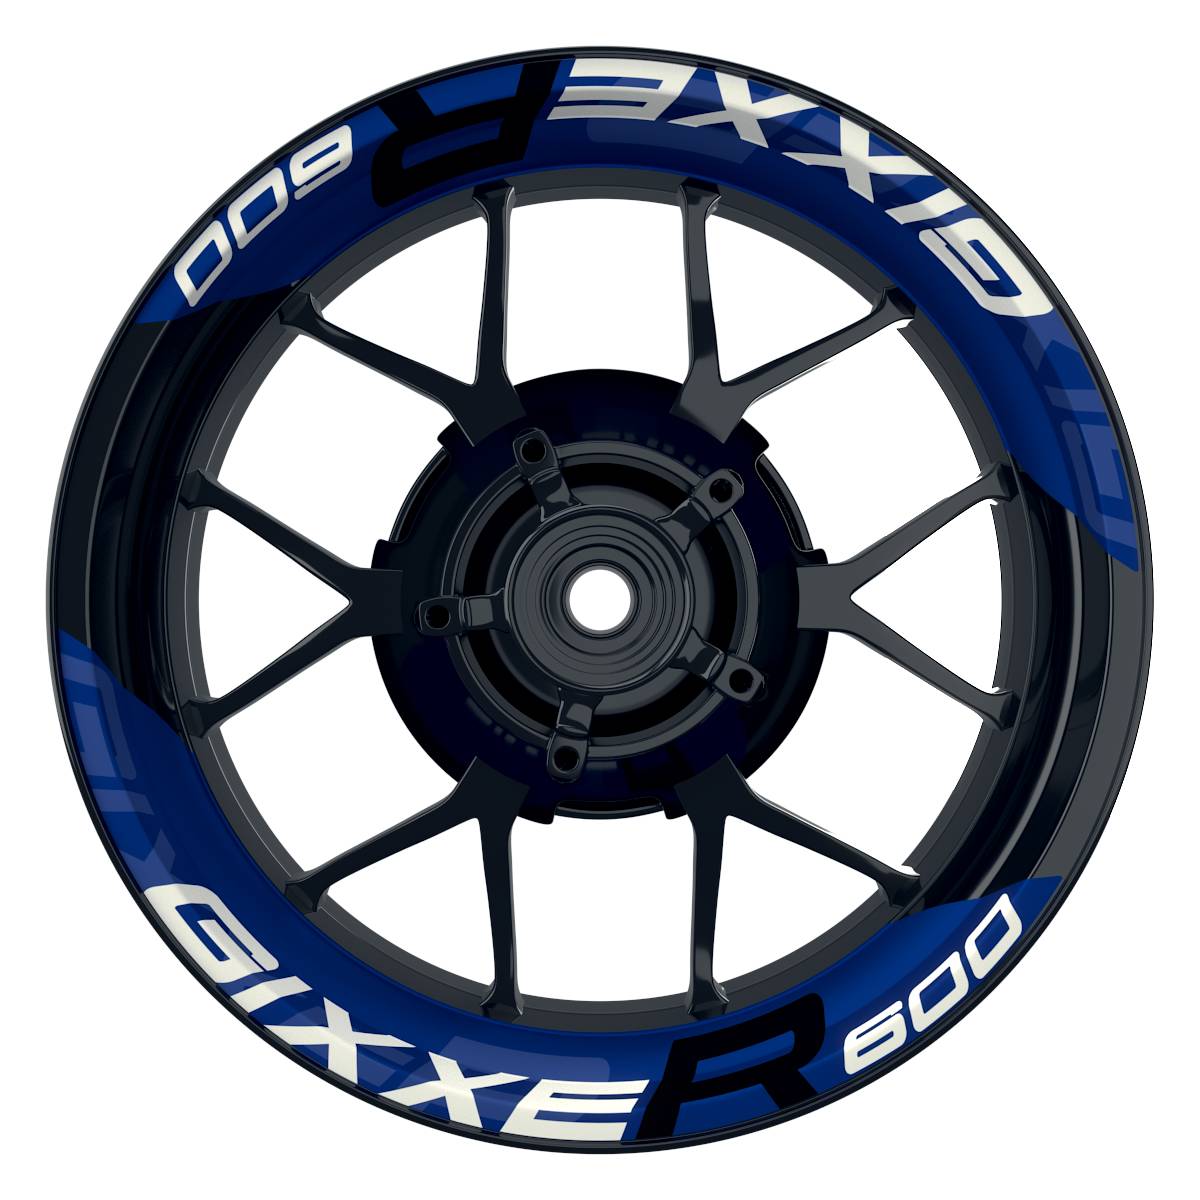 Wheelsticker Felgenaufkleber GIXXER600 einfarbig V2 blau Frontansicht